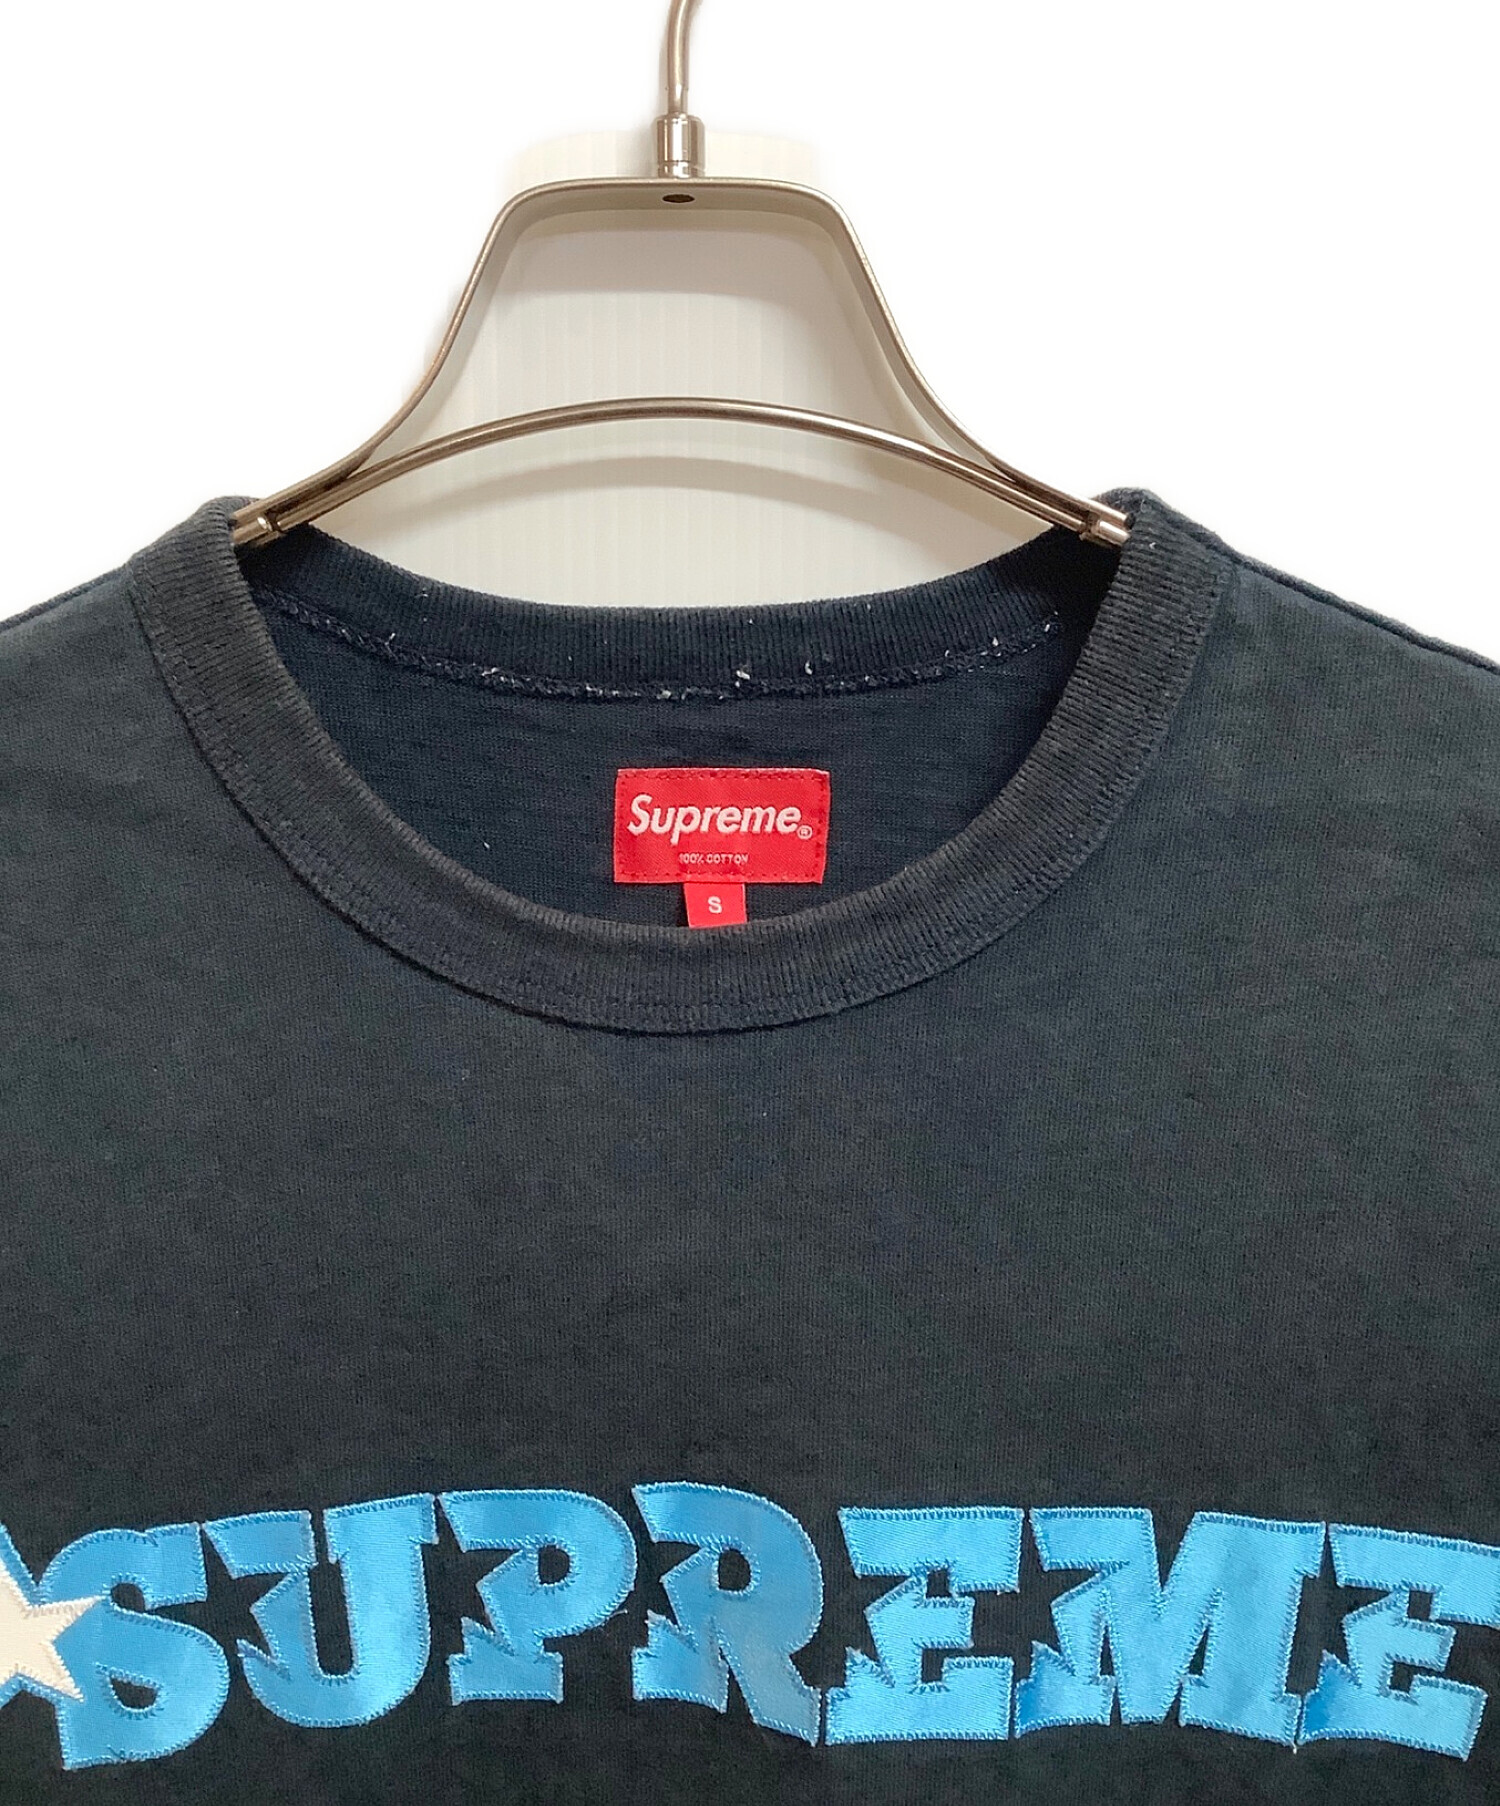 Supreme star logo s/s top tシャツ Lサイズ グレートップス - www ...